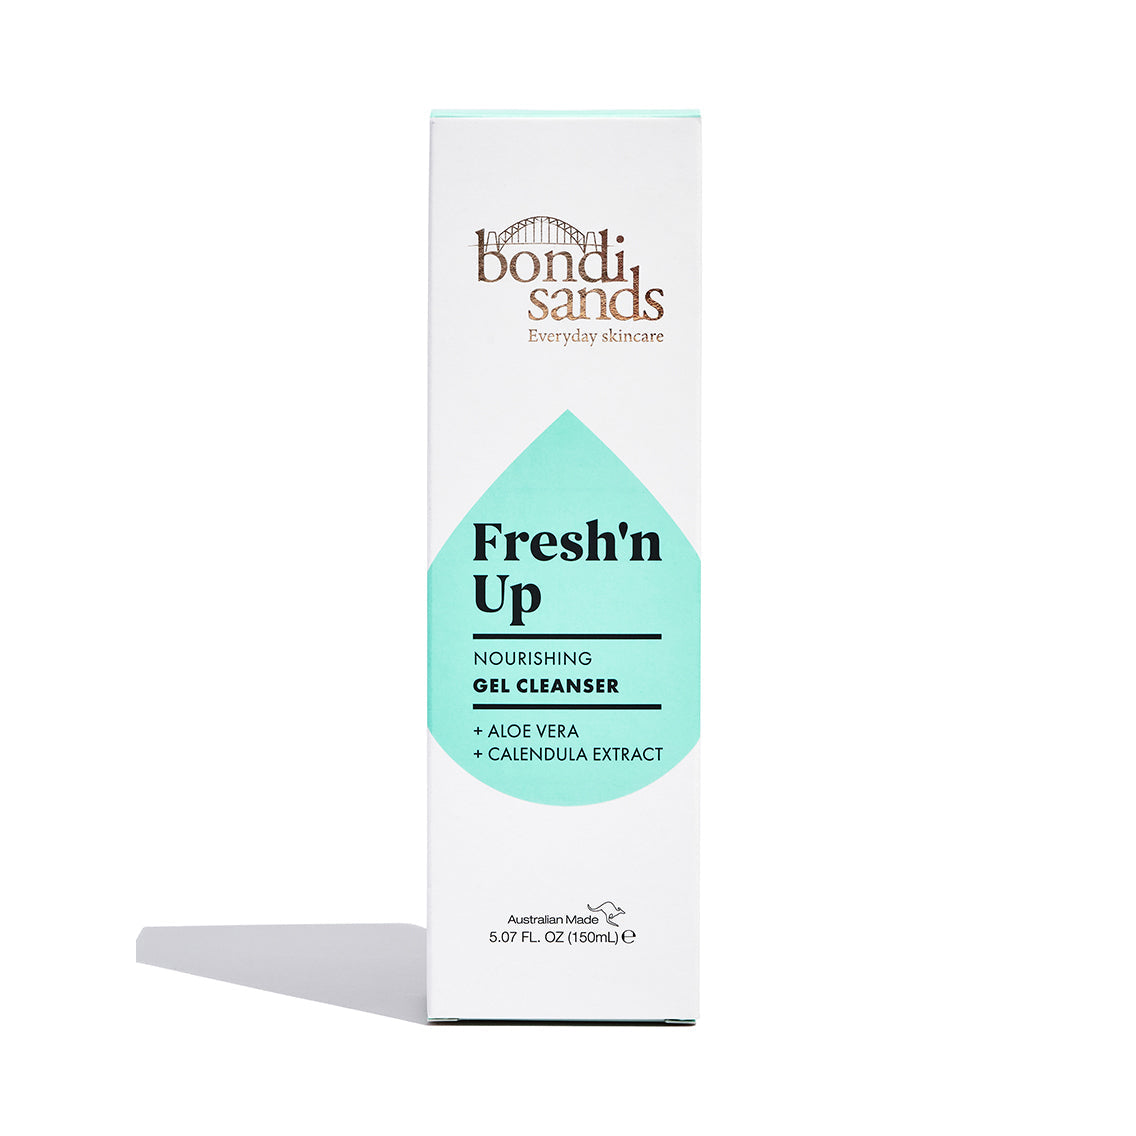 Bondi Sands Fresh'n Up Gel Cleanser (150ml) packaging